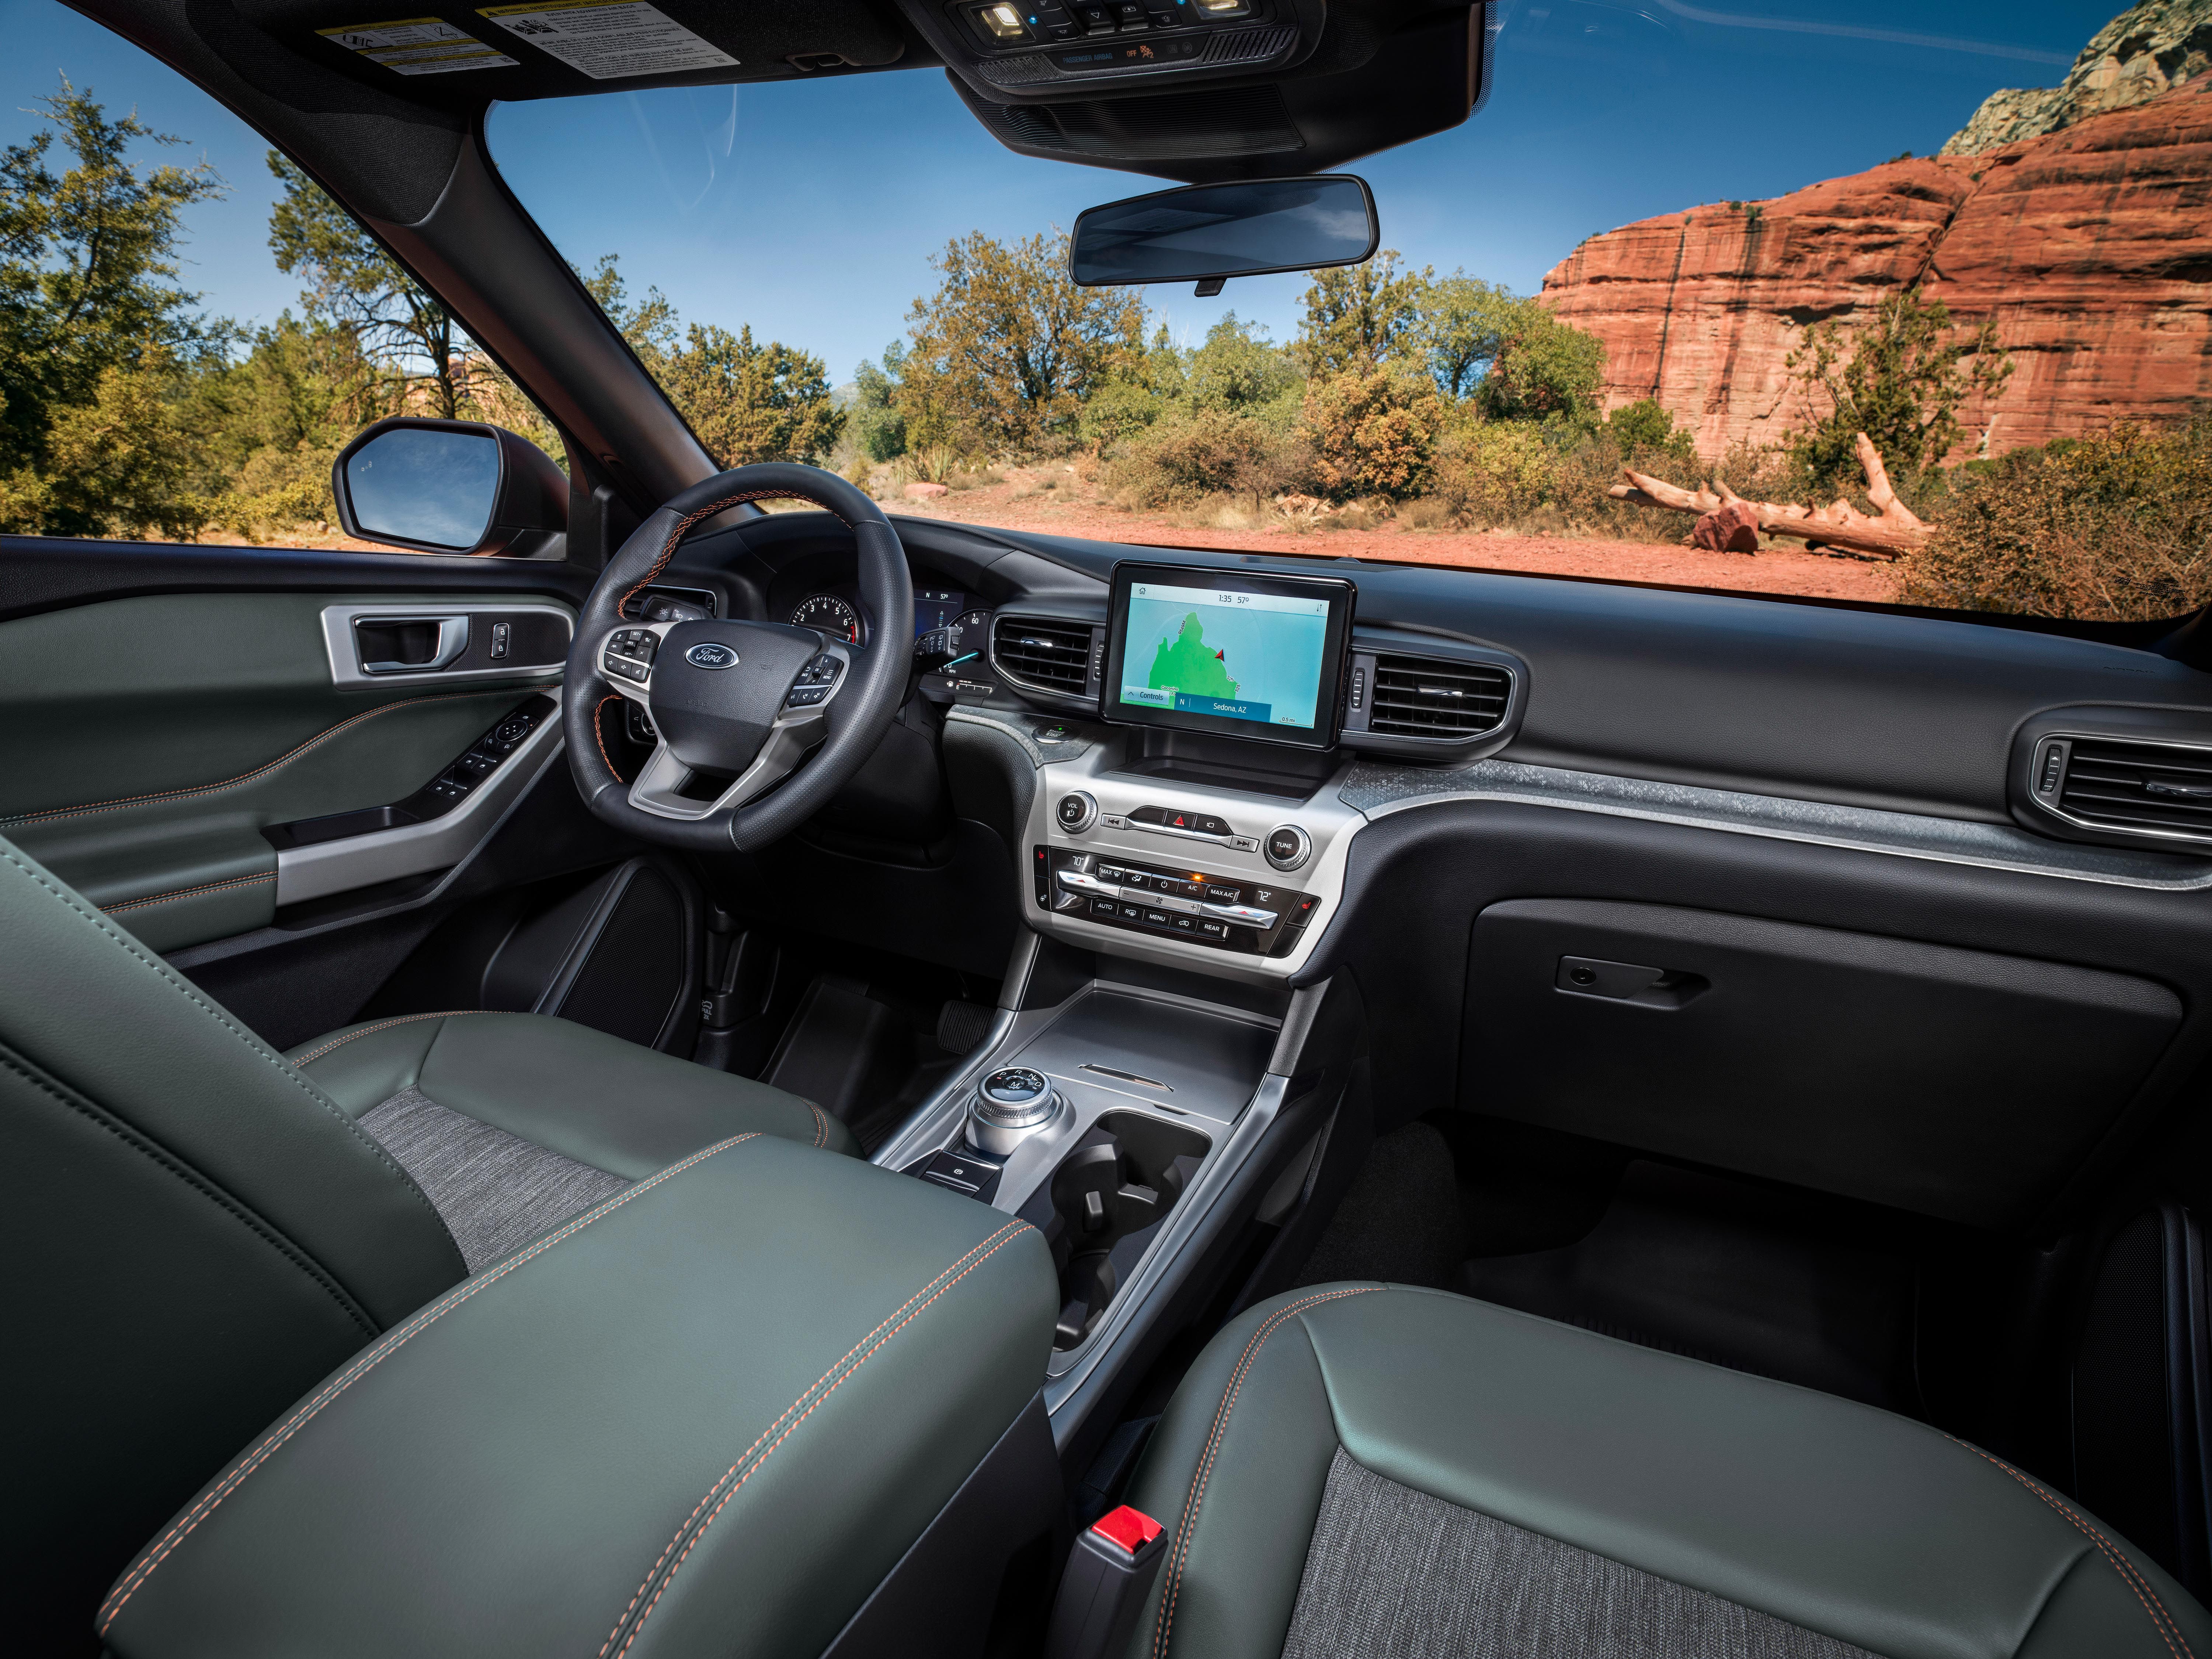 2023 Ford Explorer Review: Comprehensive Upgrades